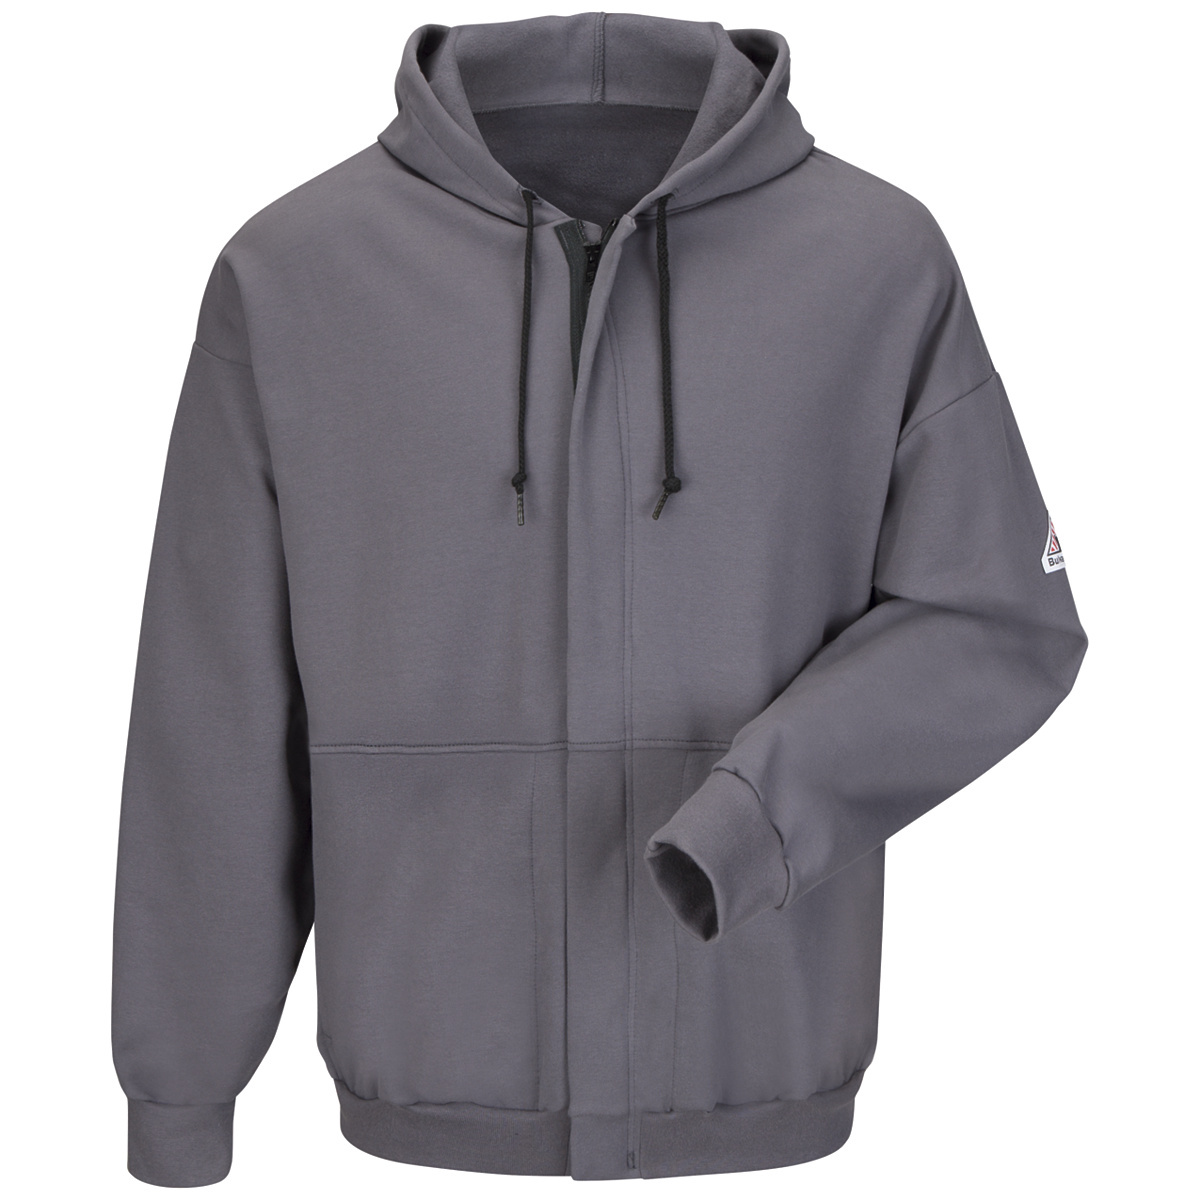 Bulwark® 2X Regular Charcoal Cotton/Spandex Brushed Fleece Flame Resistant Hooded Sweatshirt With Zipper Front Closure